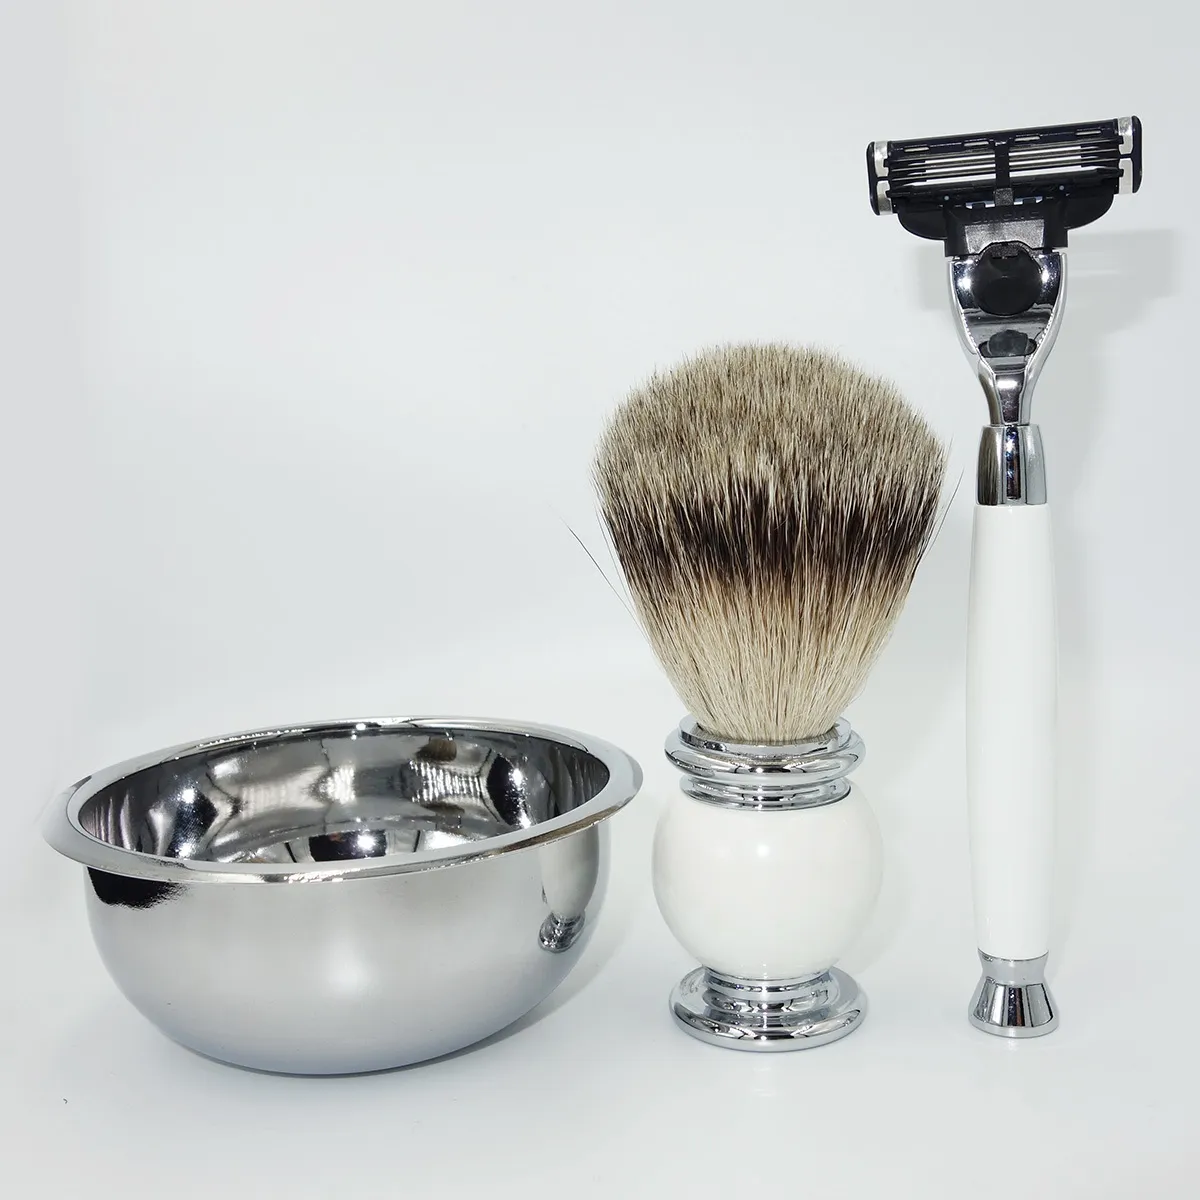 WLONG Silver Tip Soft Honey Puer Badger Hair Shaving Brush and Bowl Set with Foaming Soap Mug Cup